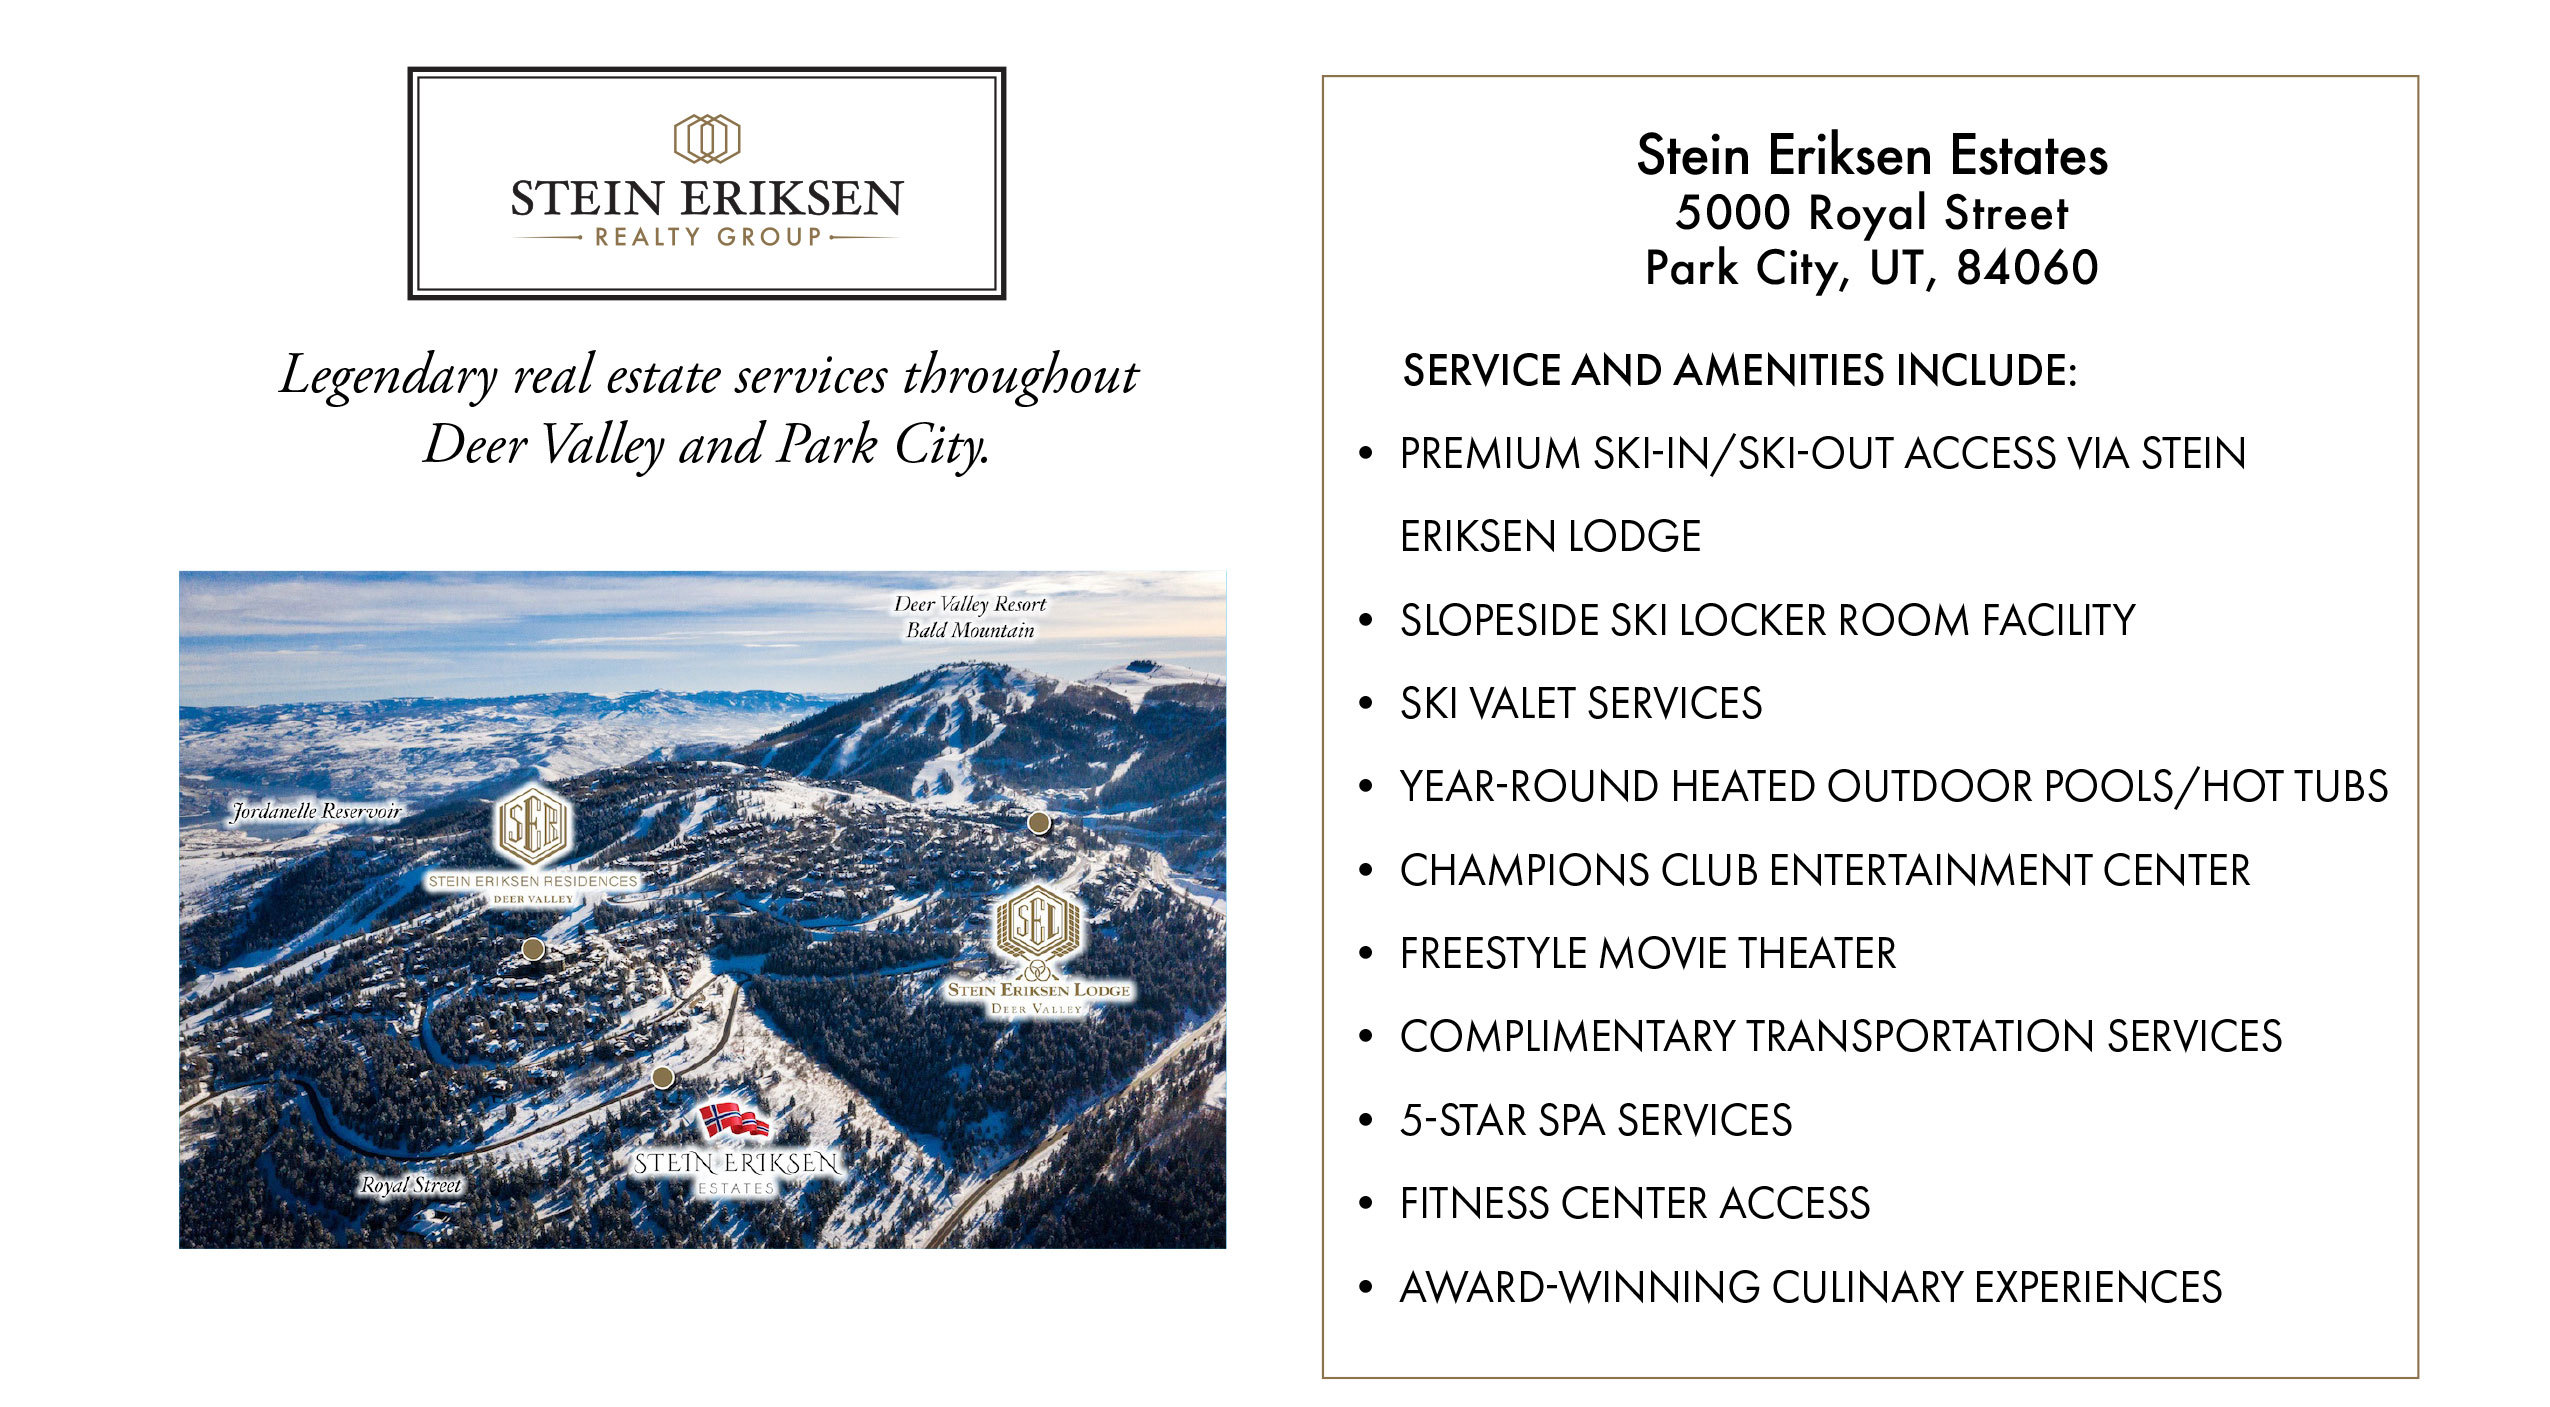 List of services and amenities for Stein Eriksen Estates